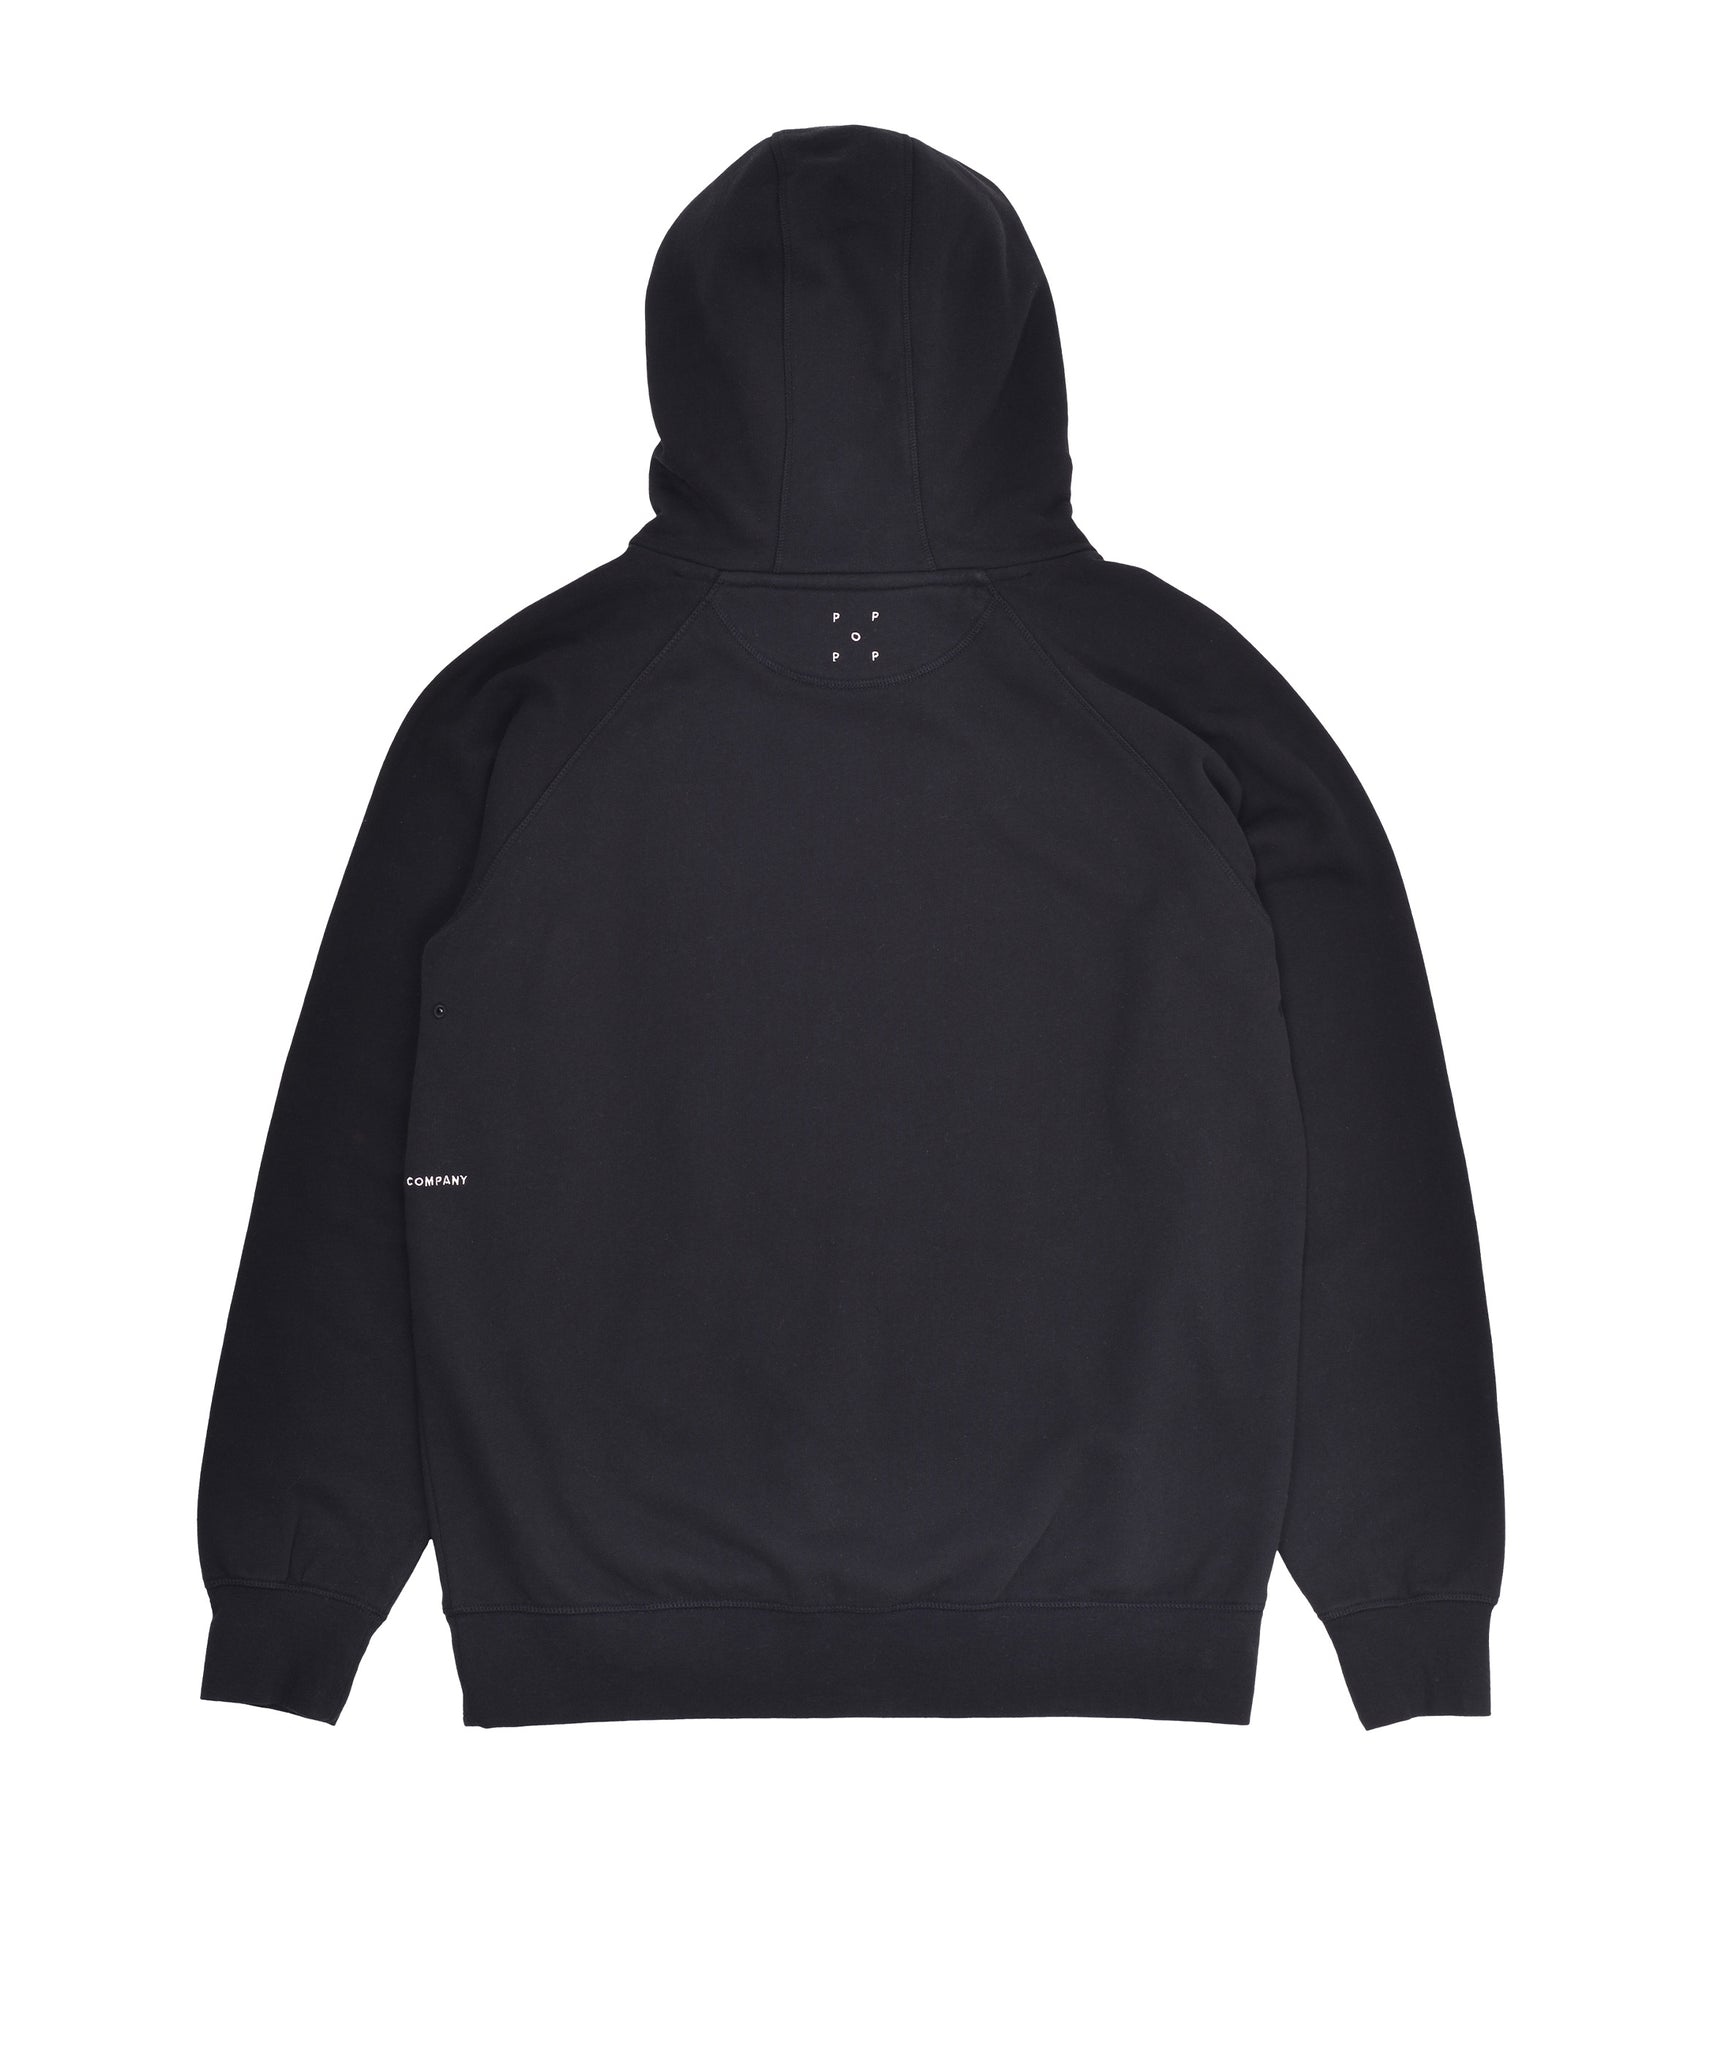 Rop Hooded Sweater - Black